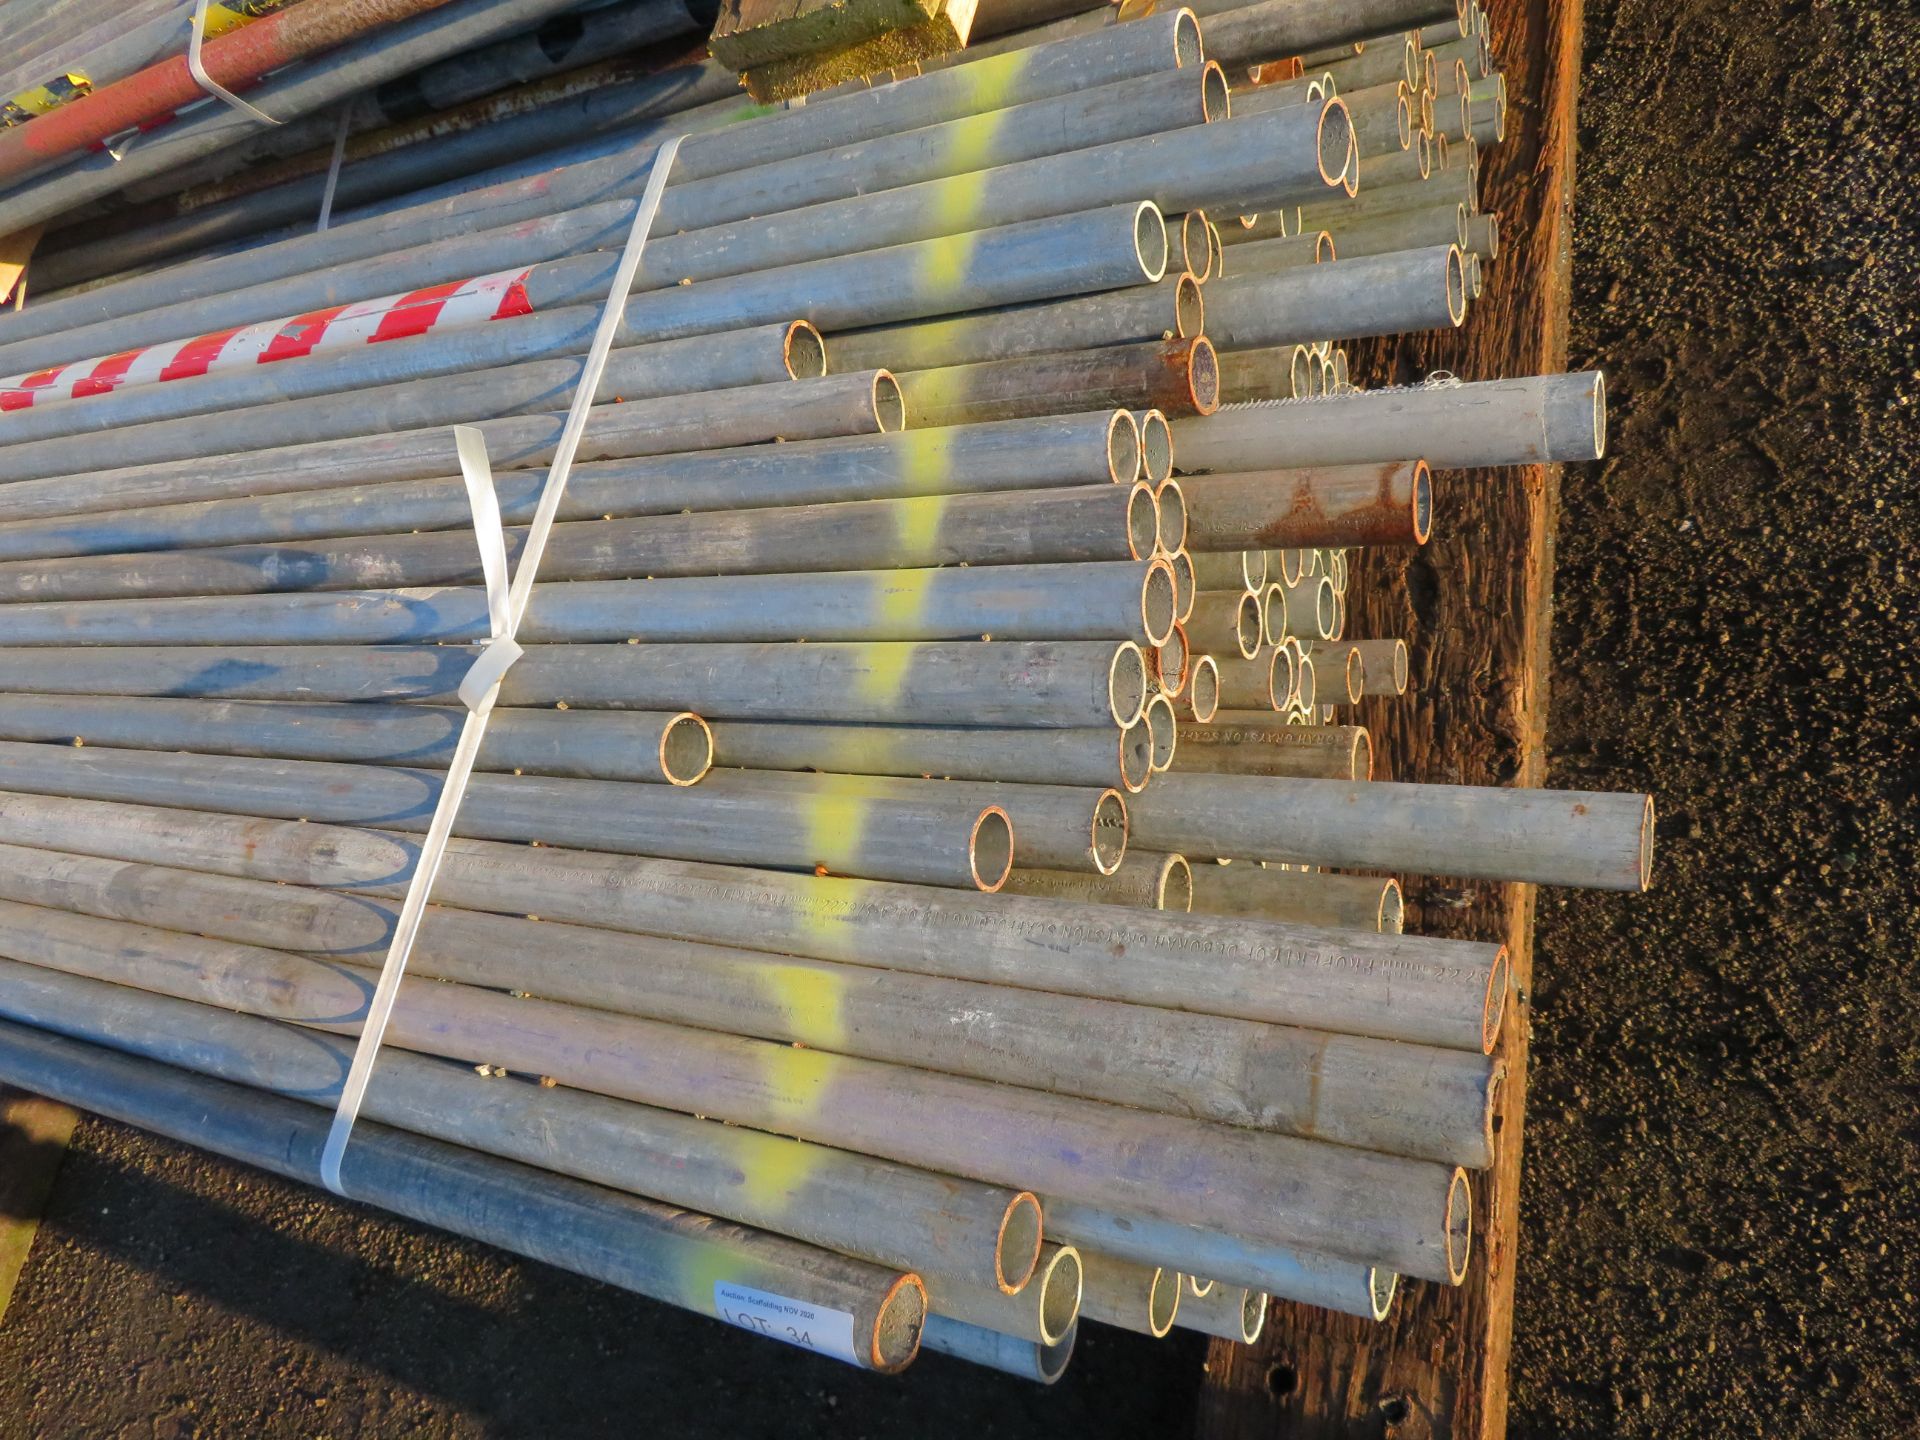 200x Various Length Galvanised Steel Scaffolding Poles. Lengths Range Between 8.5ft - 7ft. - Image 4 of 5